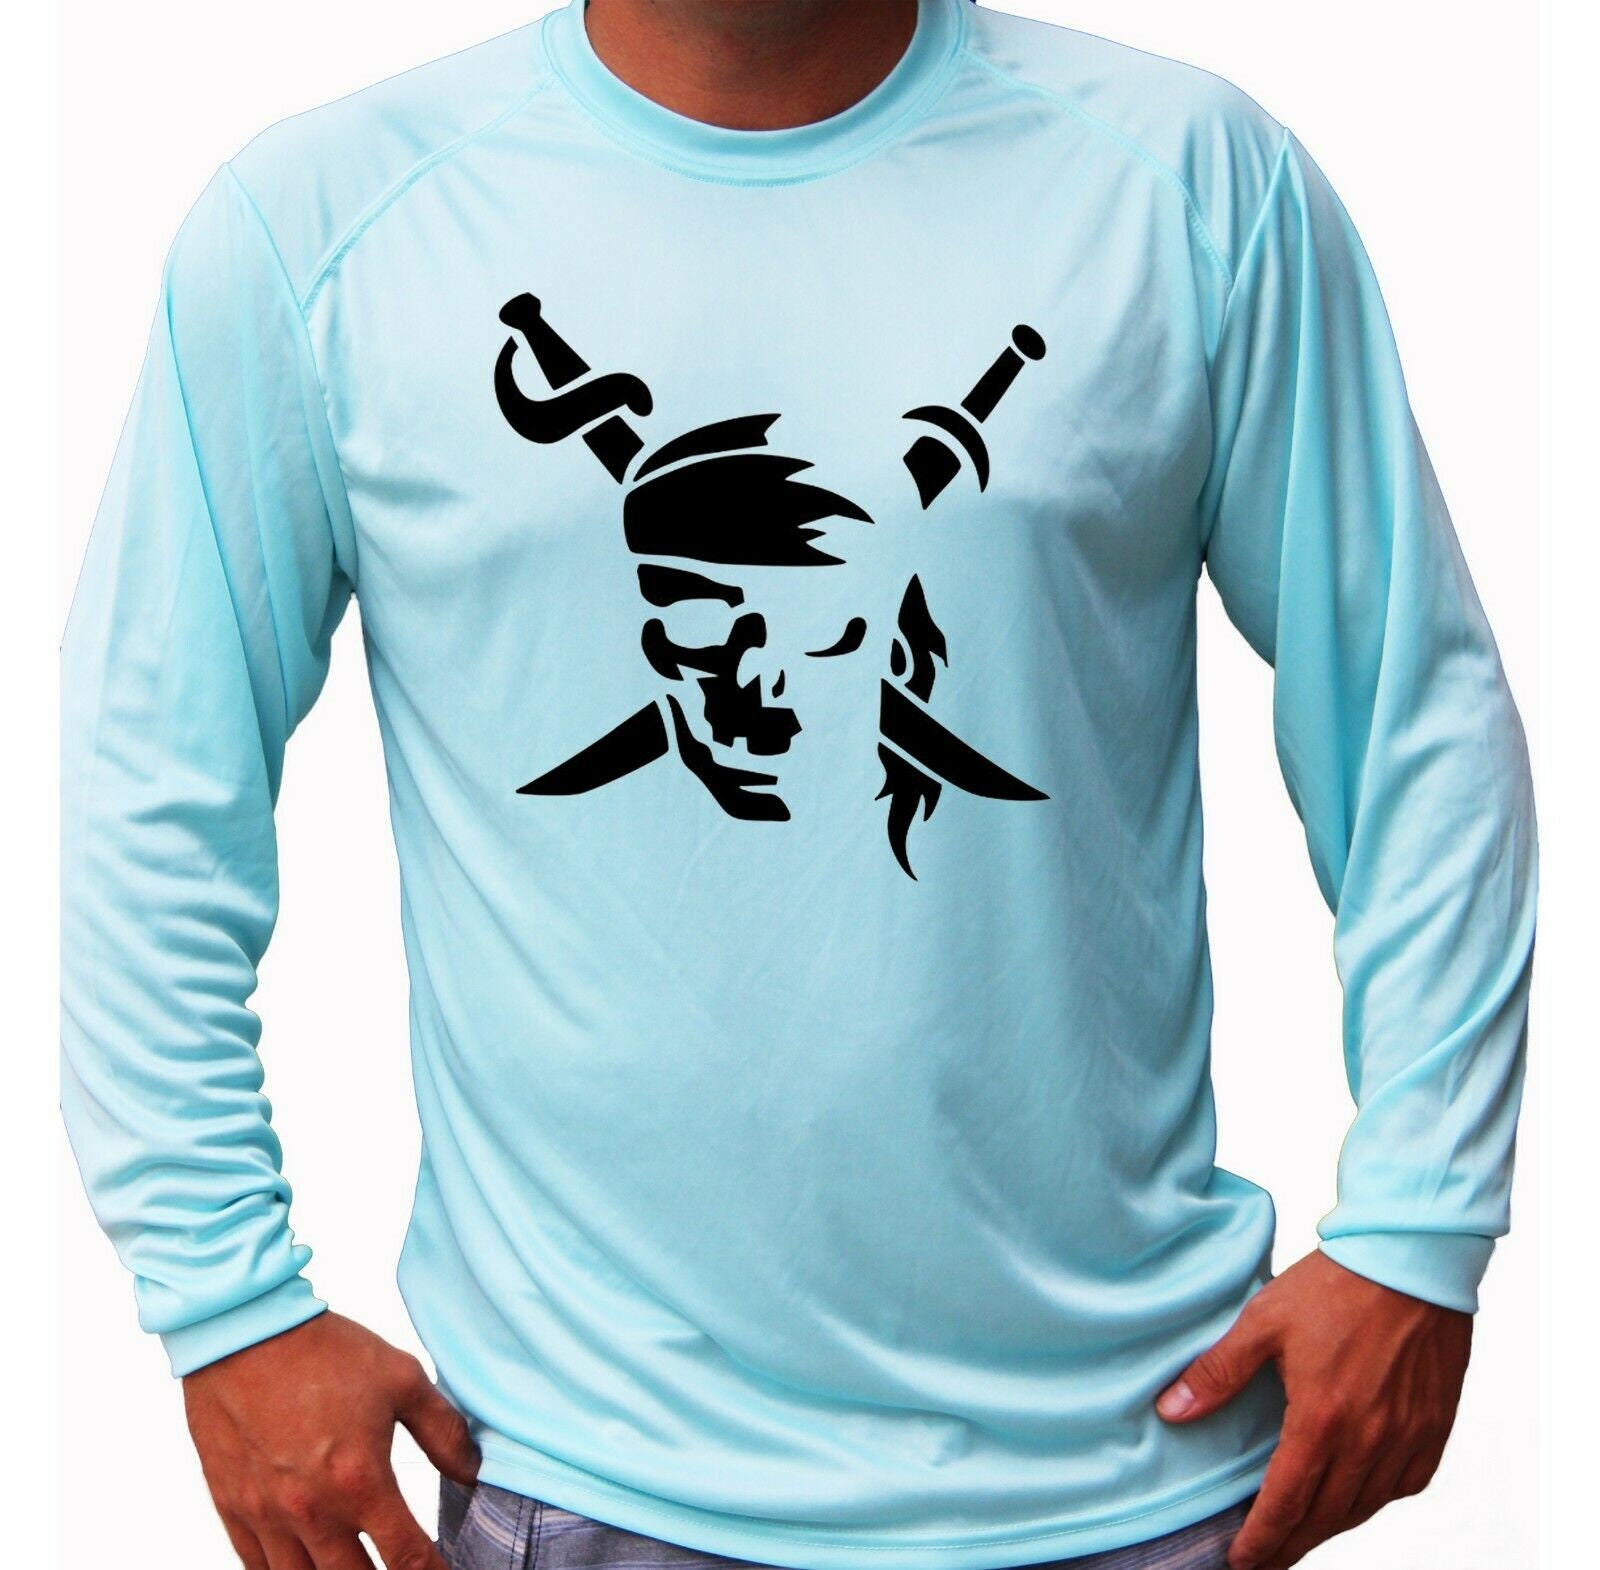 Jamaica Flag Map Ocean Fishing Shirt UPF 50 Long Sleeve T-Shirt Sun UV  Protection Front Long Sleeve Hood Hooded